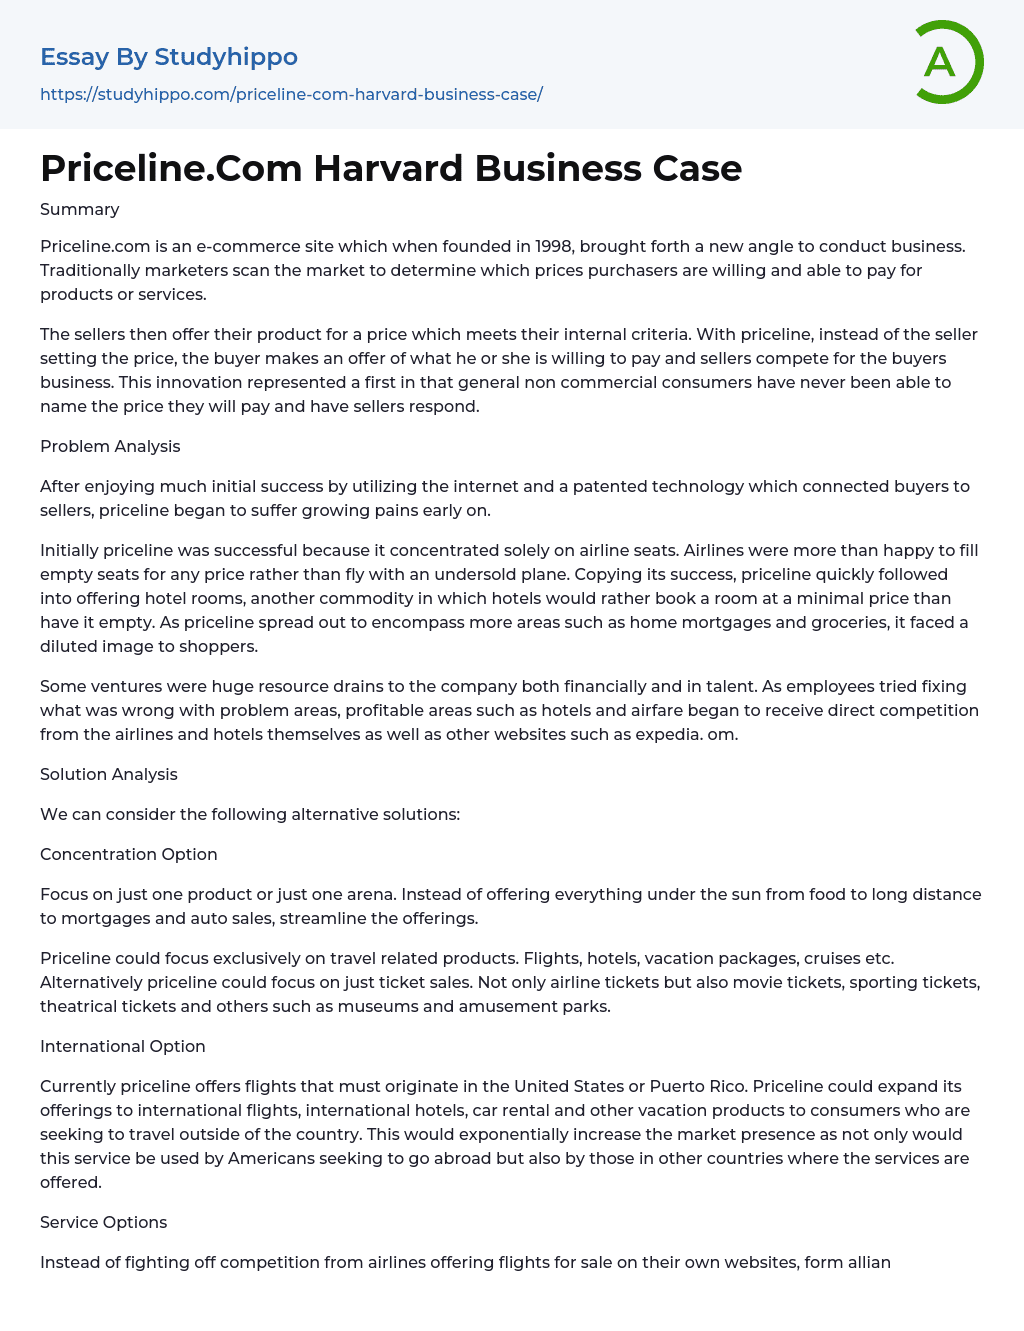 Priceline.Com Harvard Business Case Essay Example